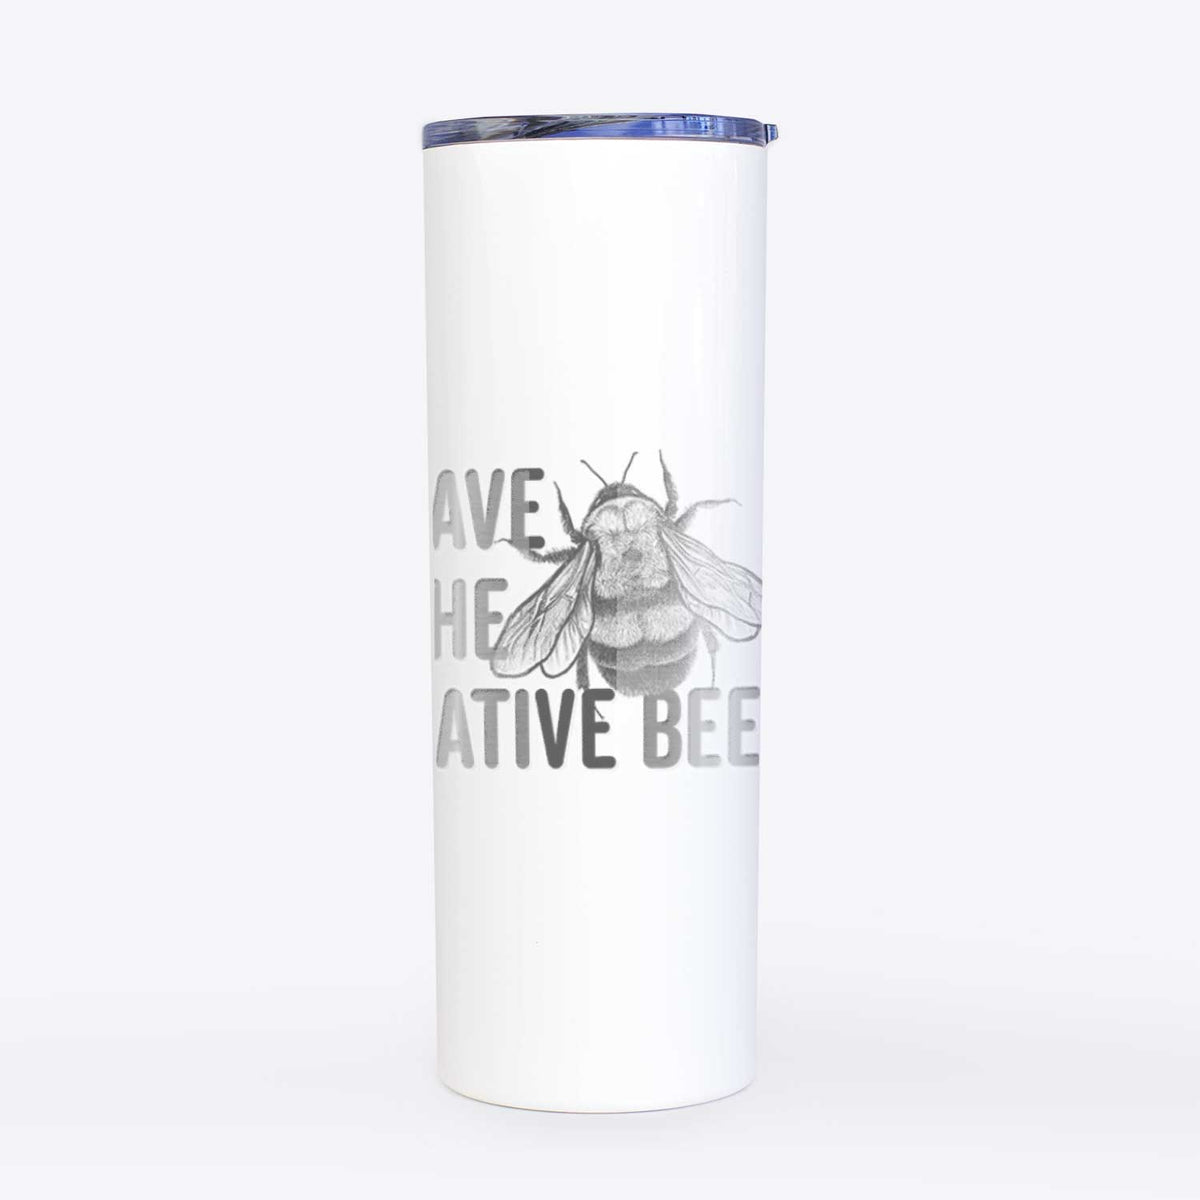 Save the Native Bees - 20oz Skinny Tumbler